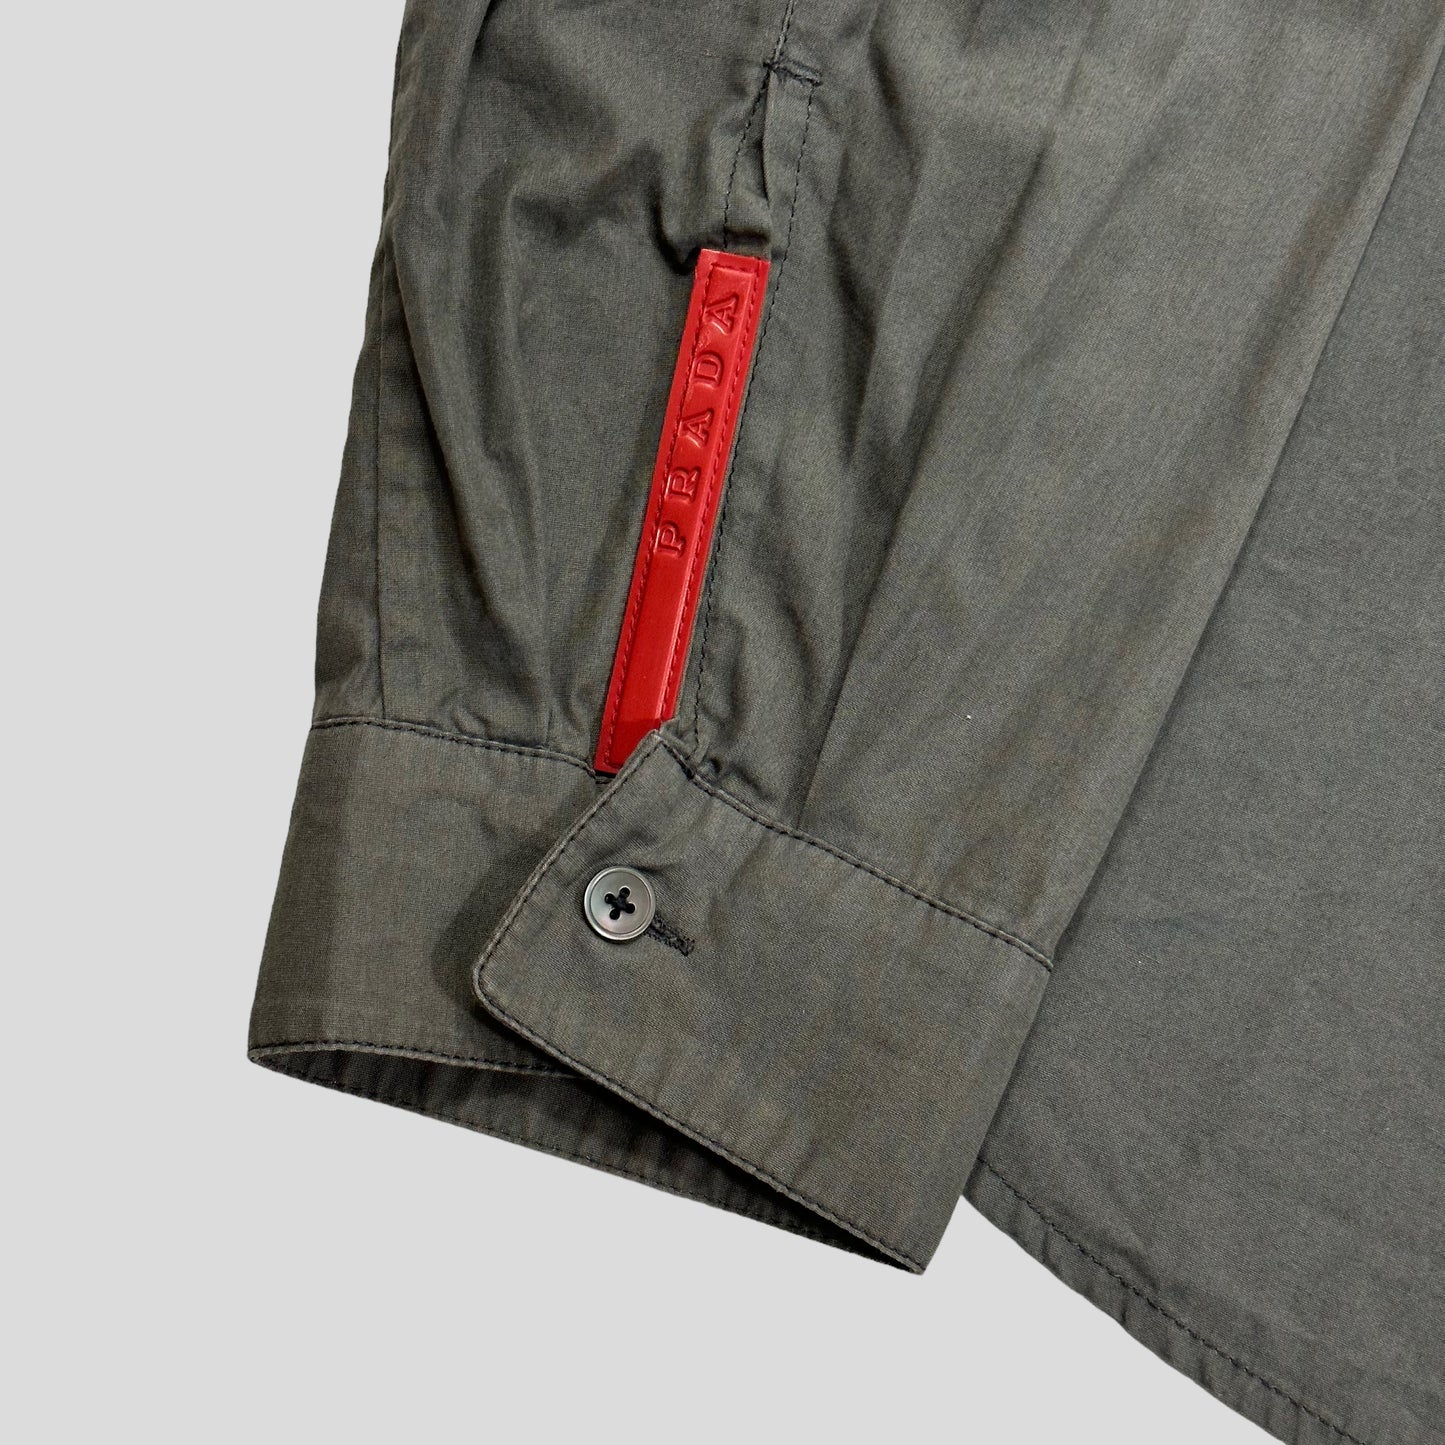 Prada Sport 00’s Grey Cotton Red Tab Shirt - L/XL